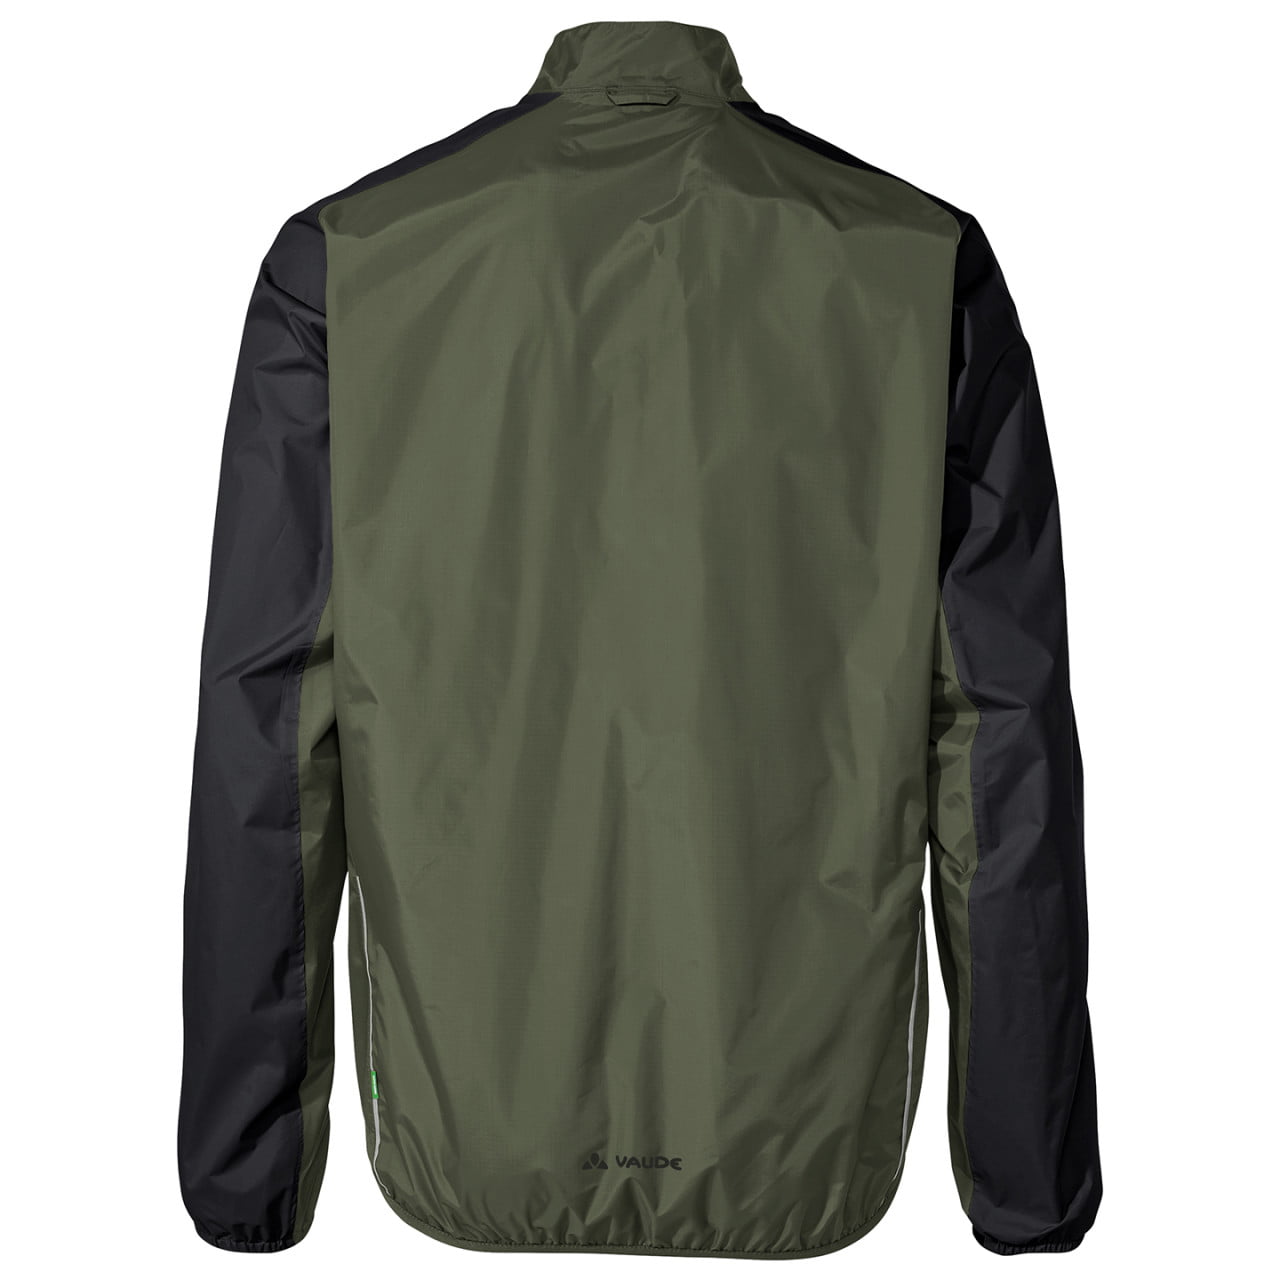 Drop III Waterproof Jacket